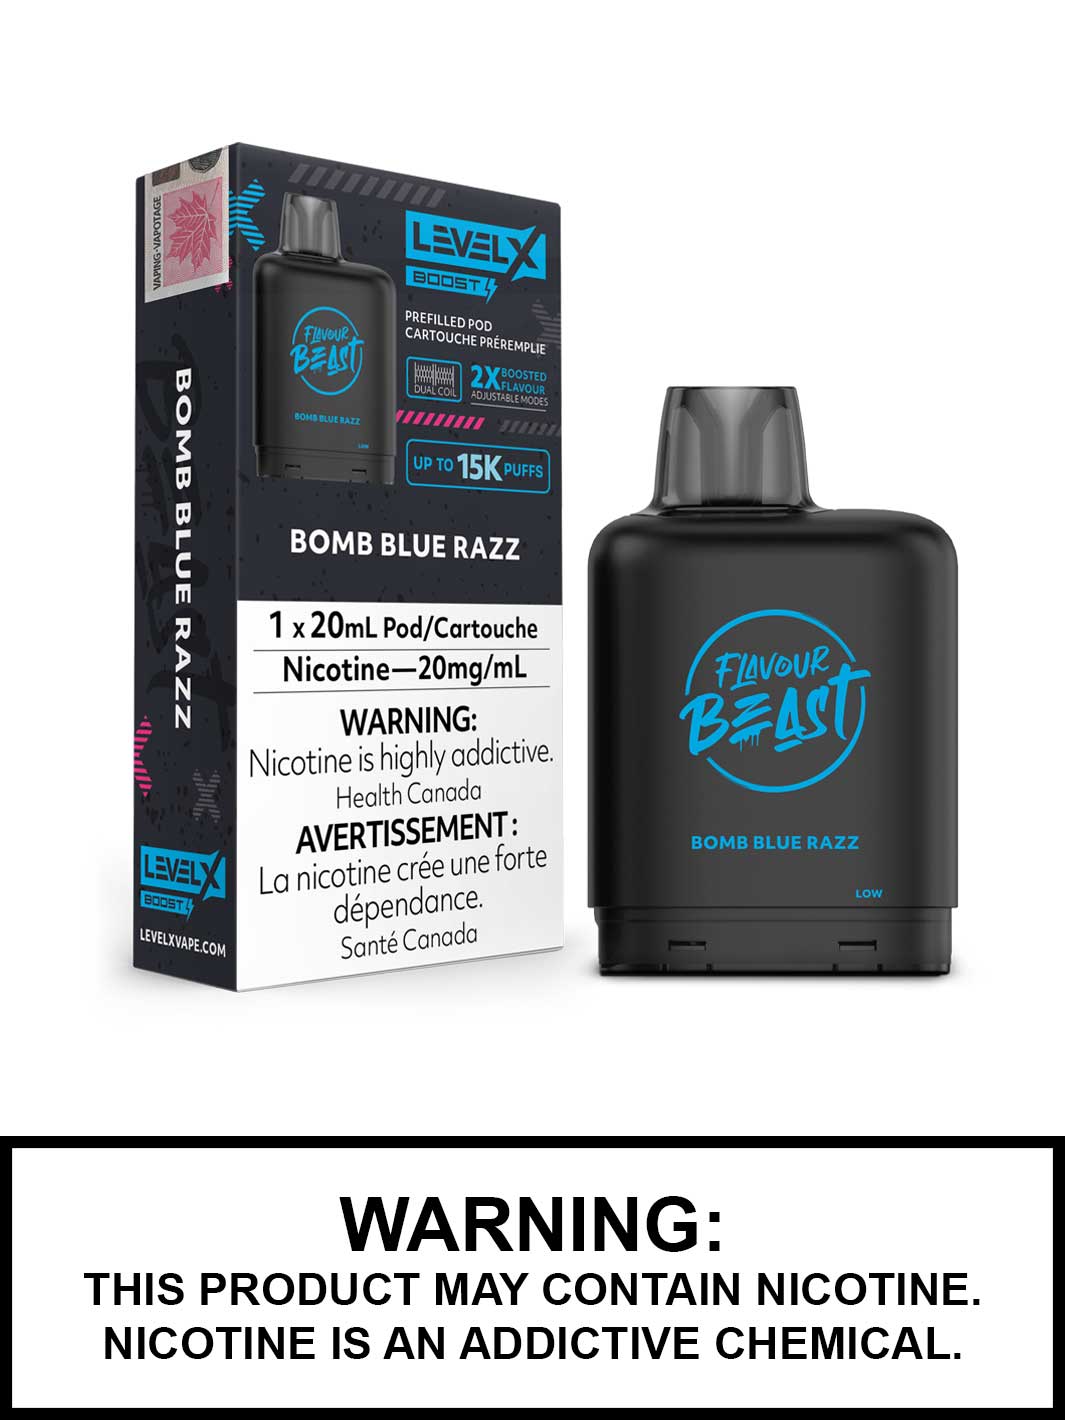 Bomb Blue Razz Flavour Beast Level X Boost Pods, Level X Vape, Vape360 Canada